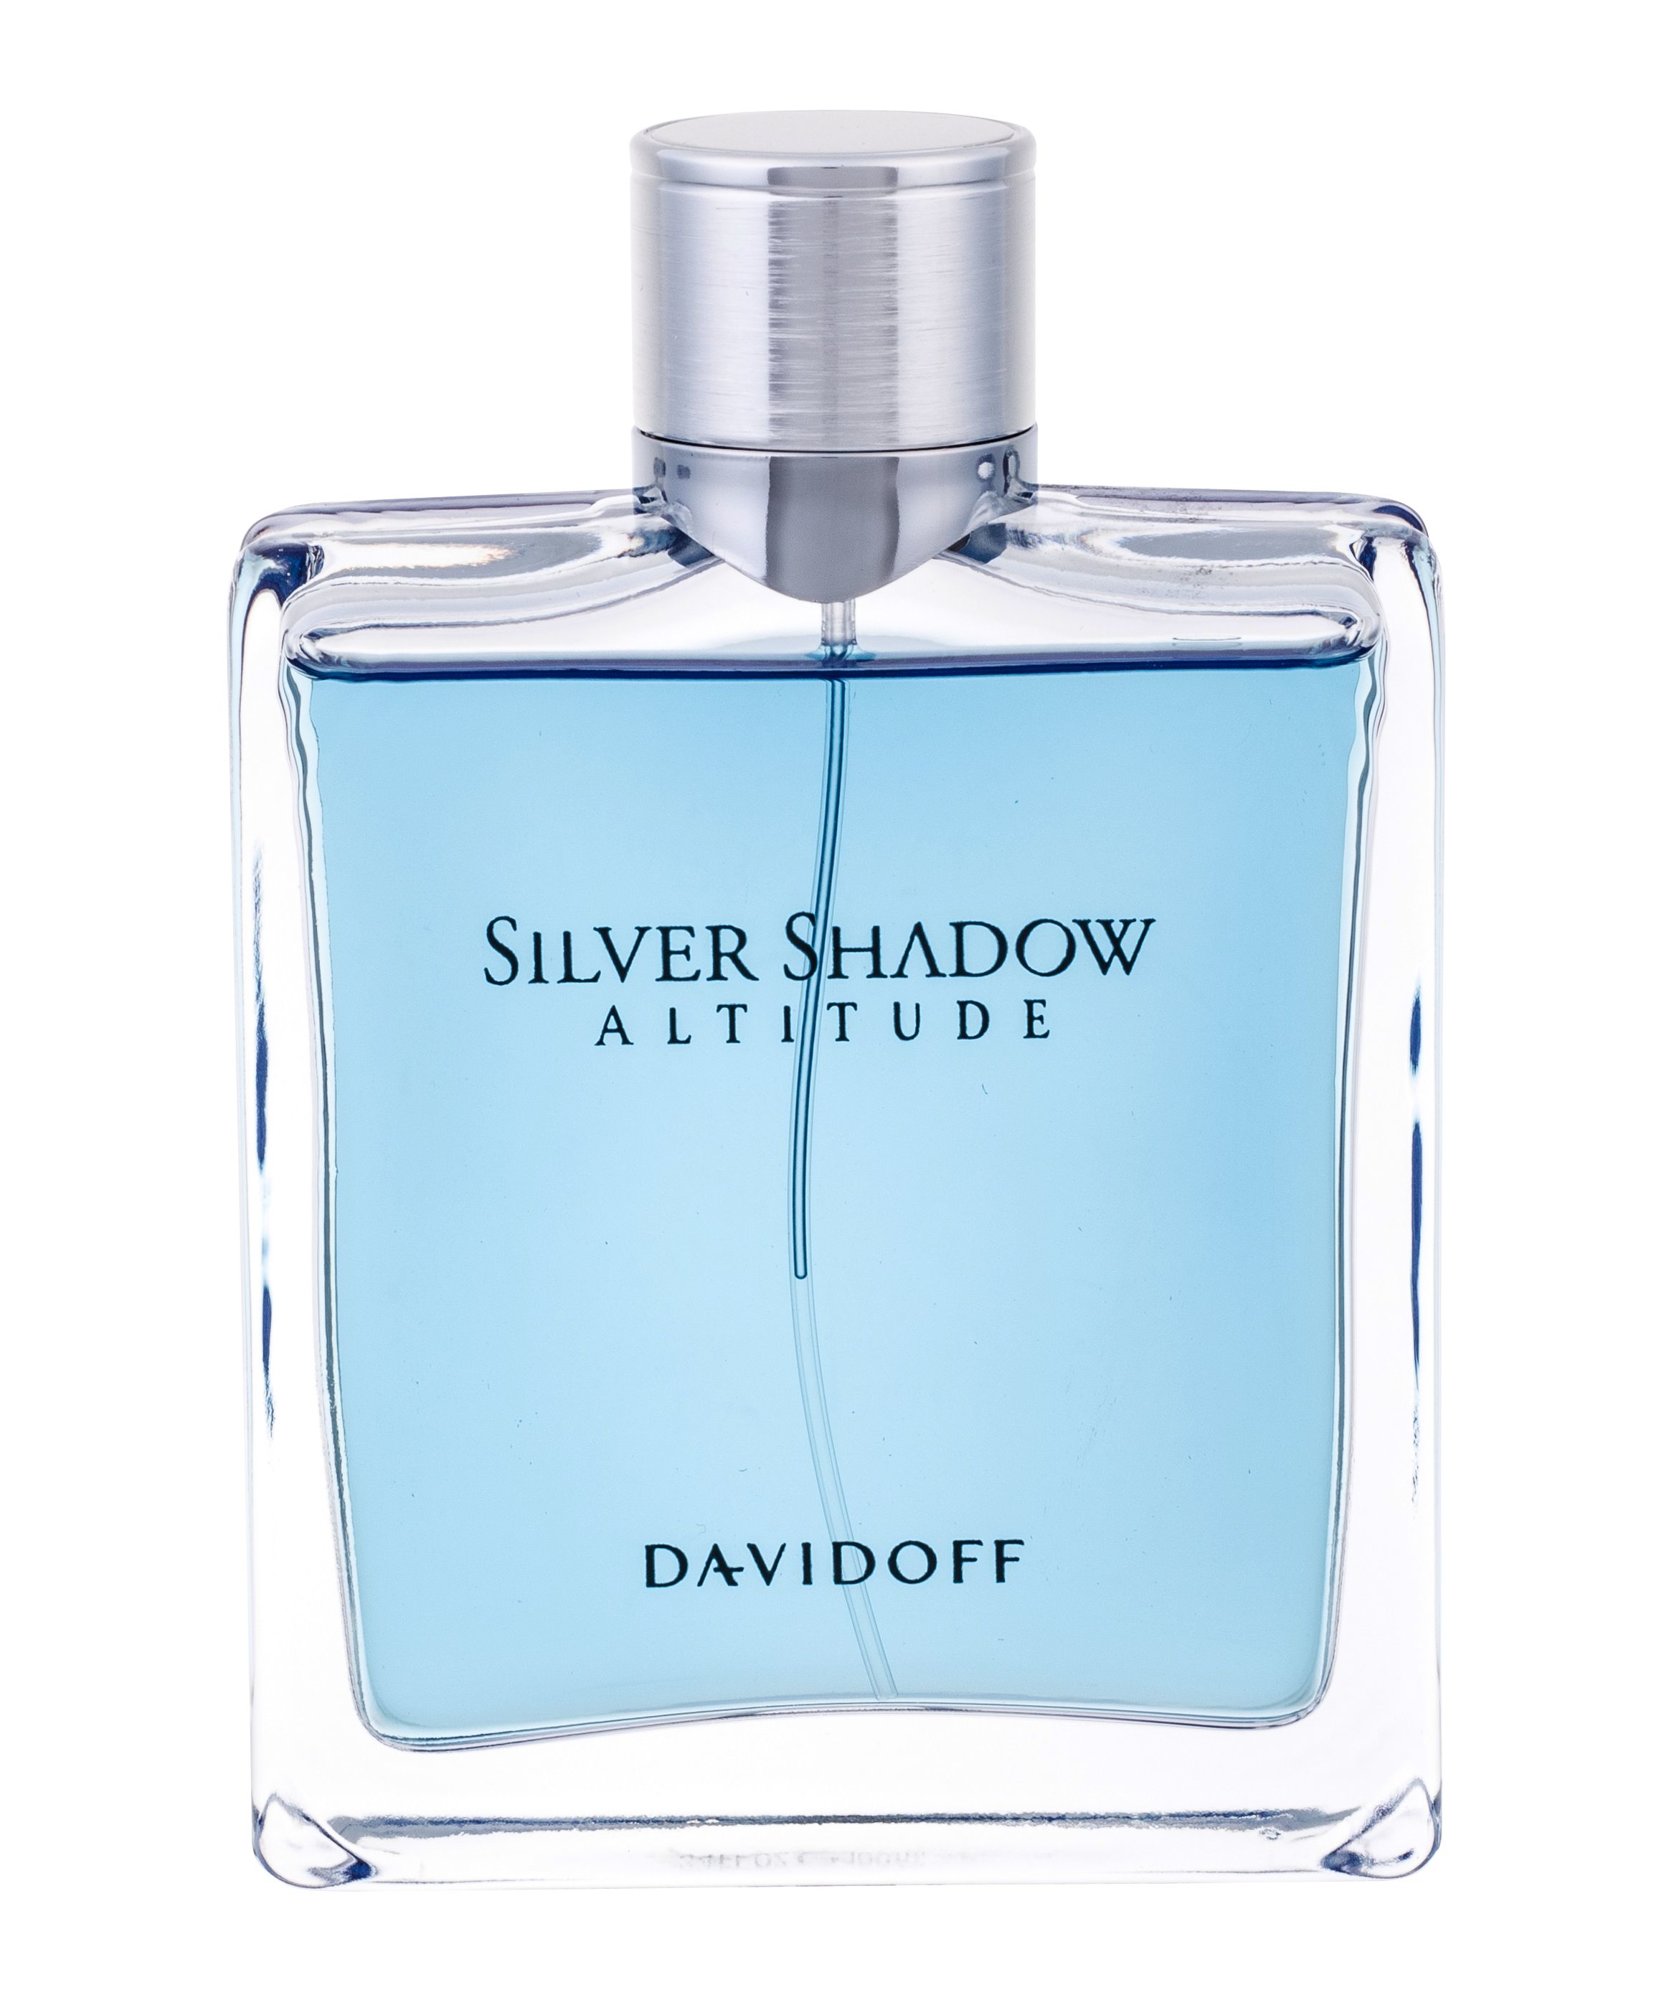 Davidoff Silver Shadow Altitude (M)